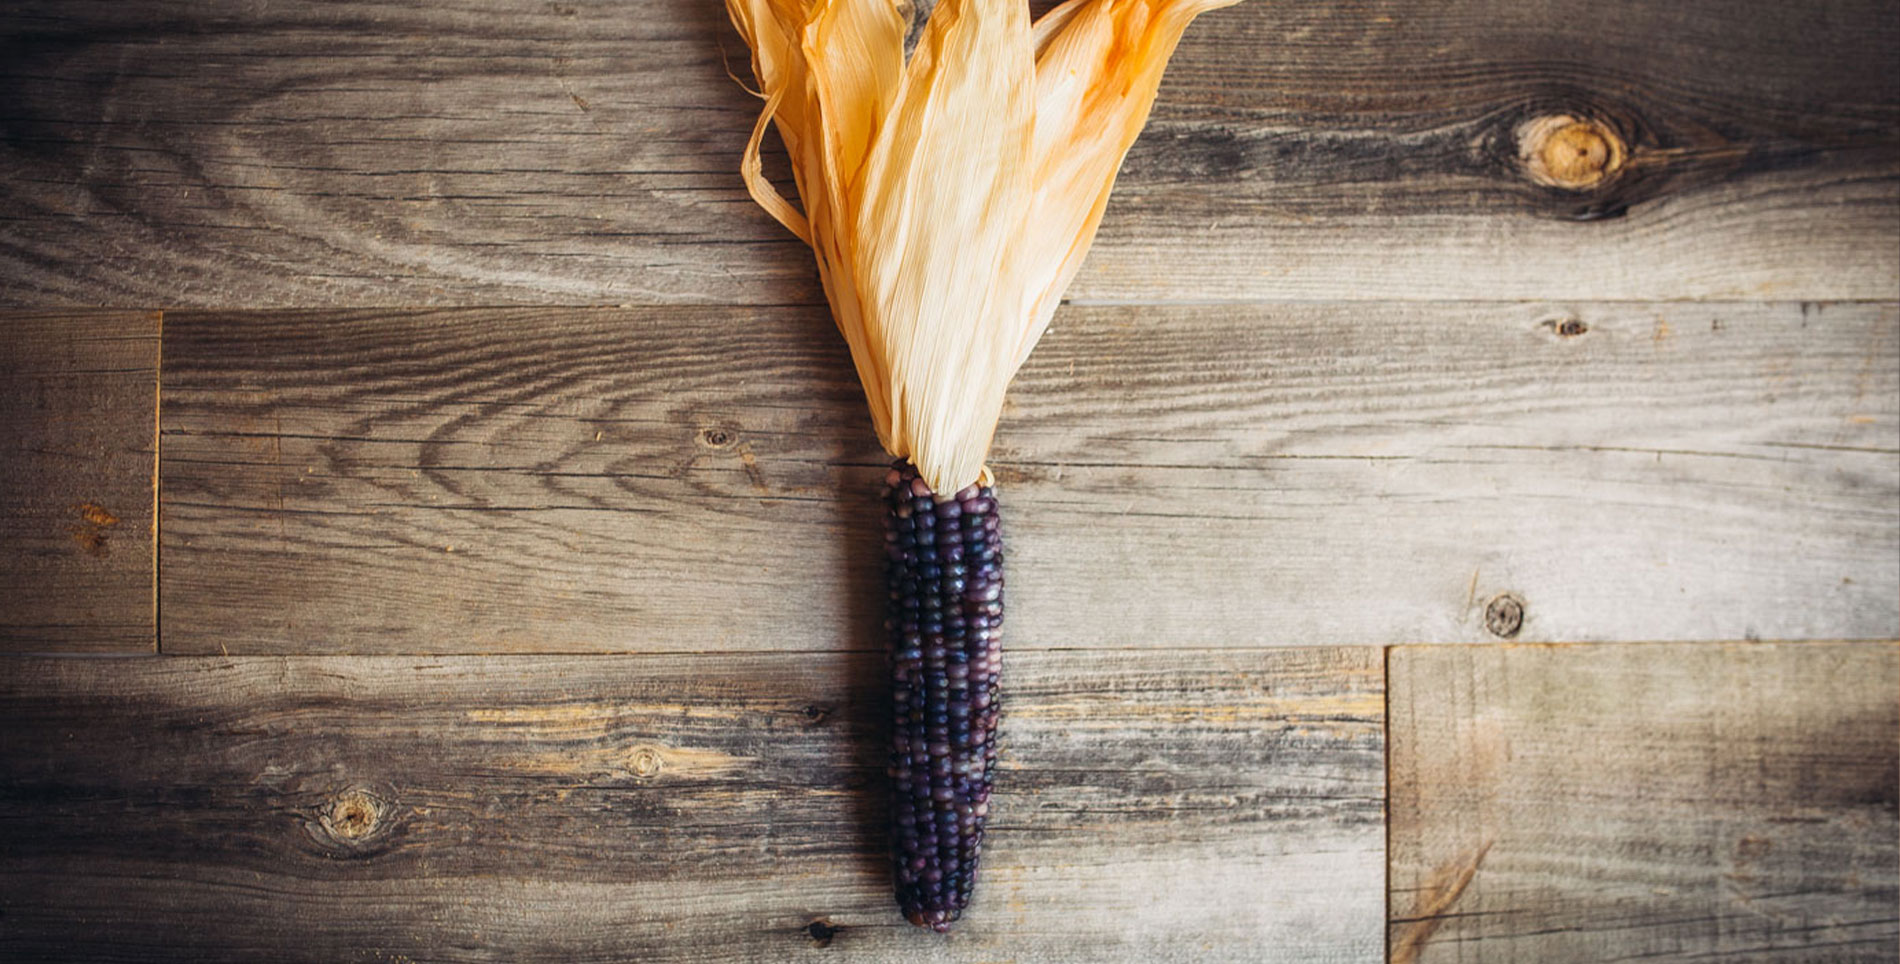 Acoma Blue Corn Restored To Its Community of Origin